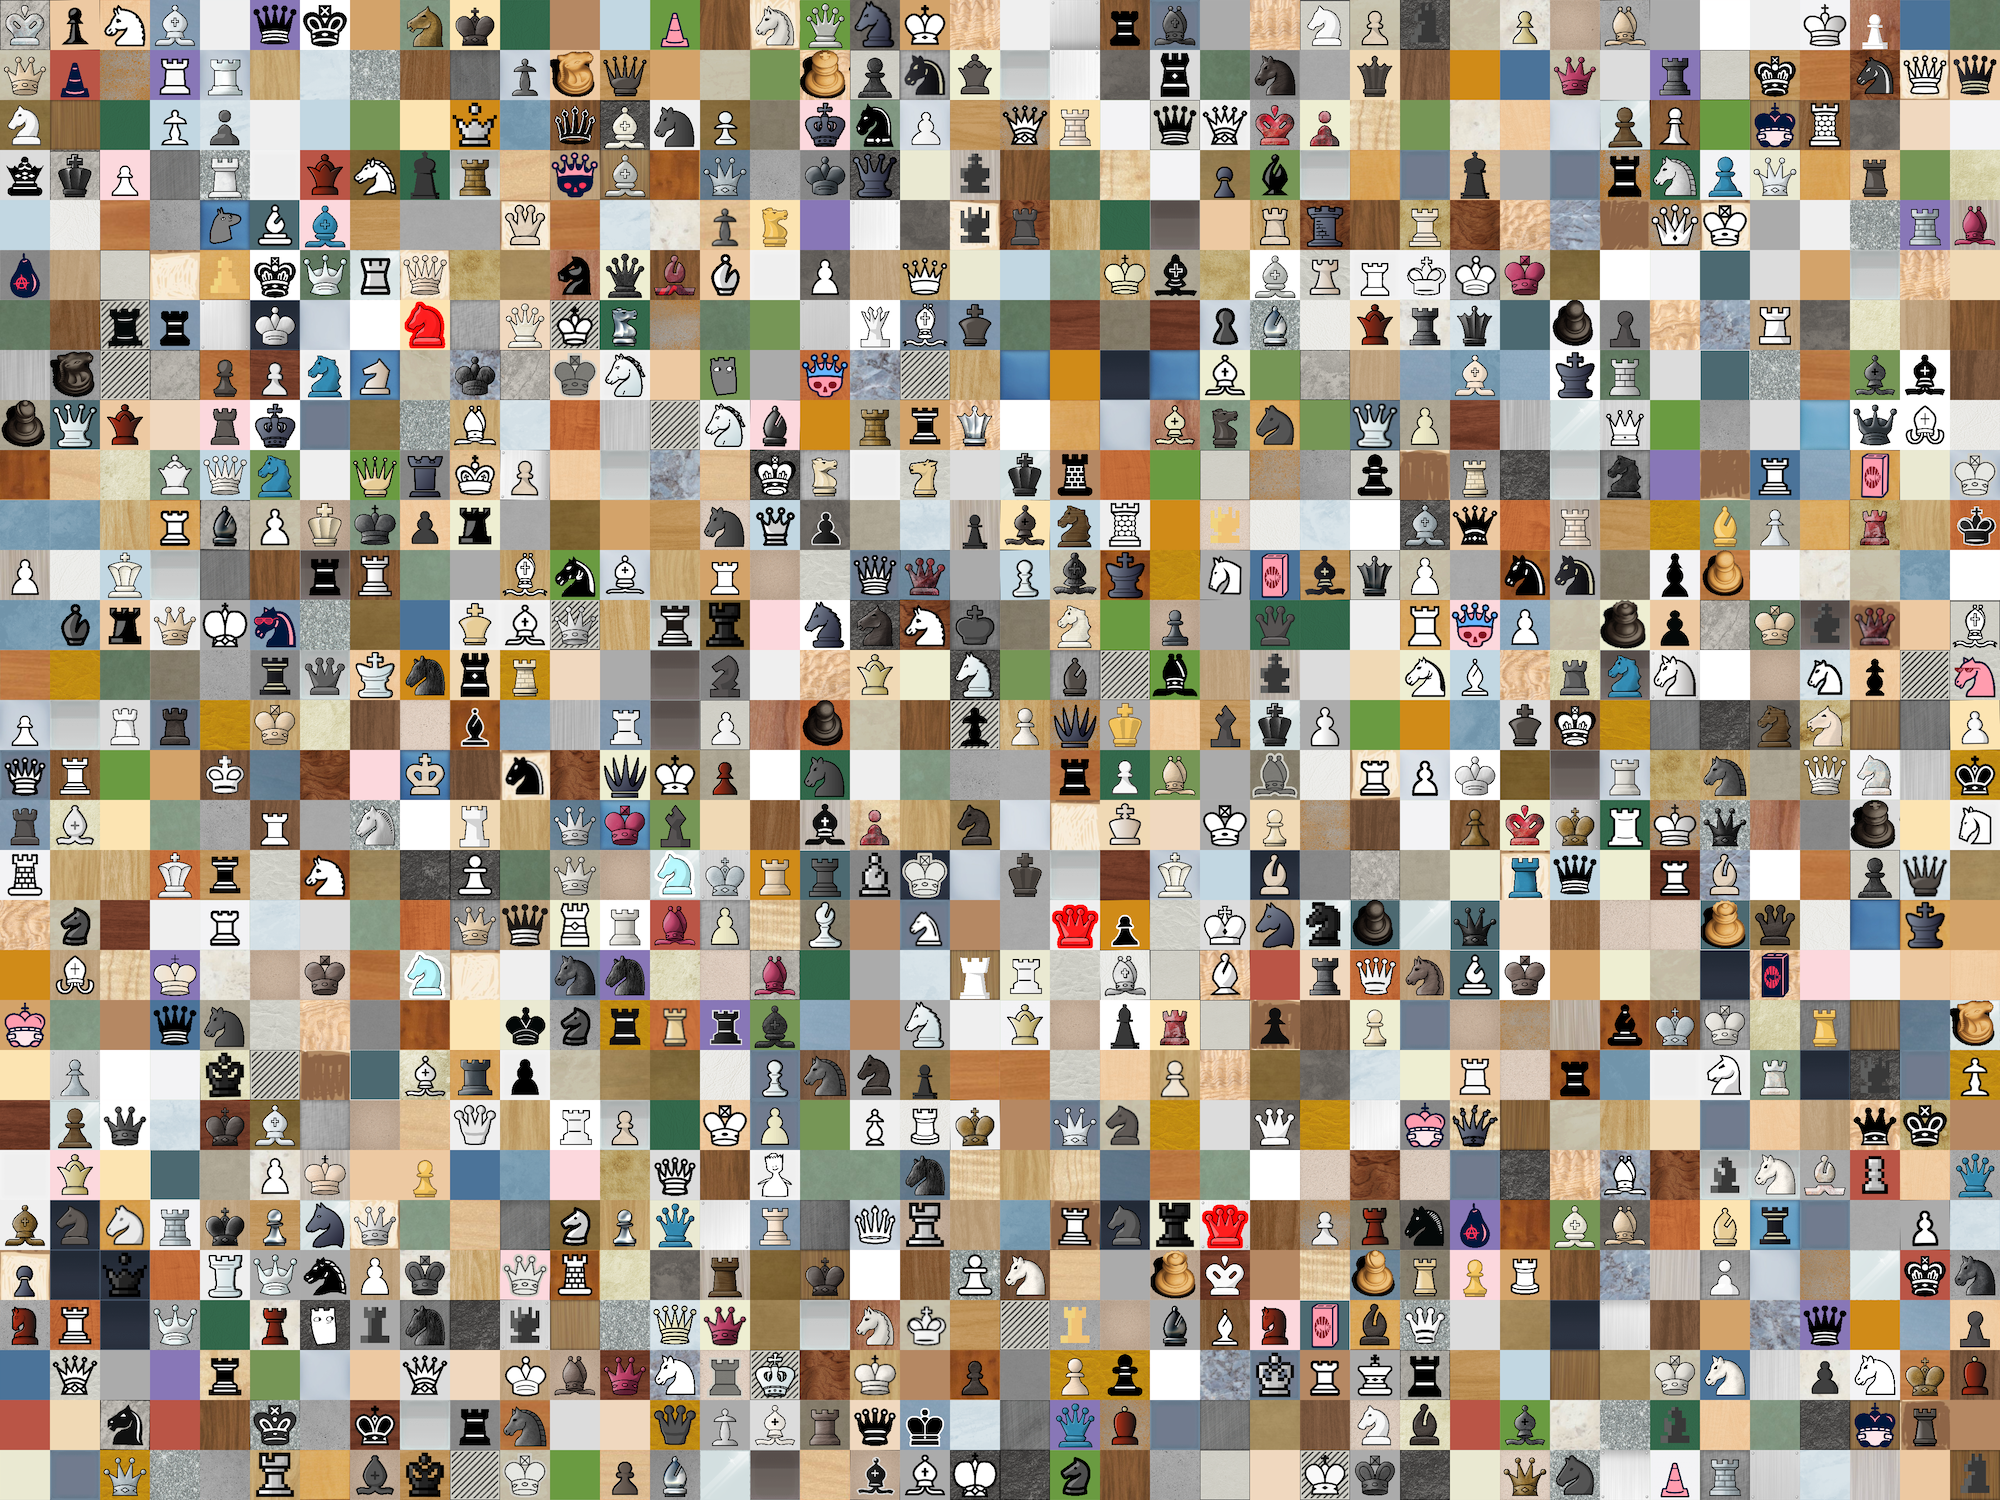 1200 randomly generated chessboard squares.